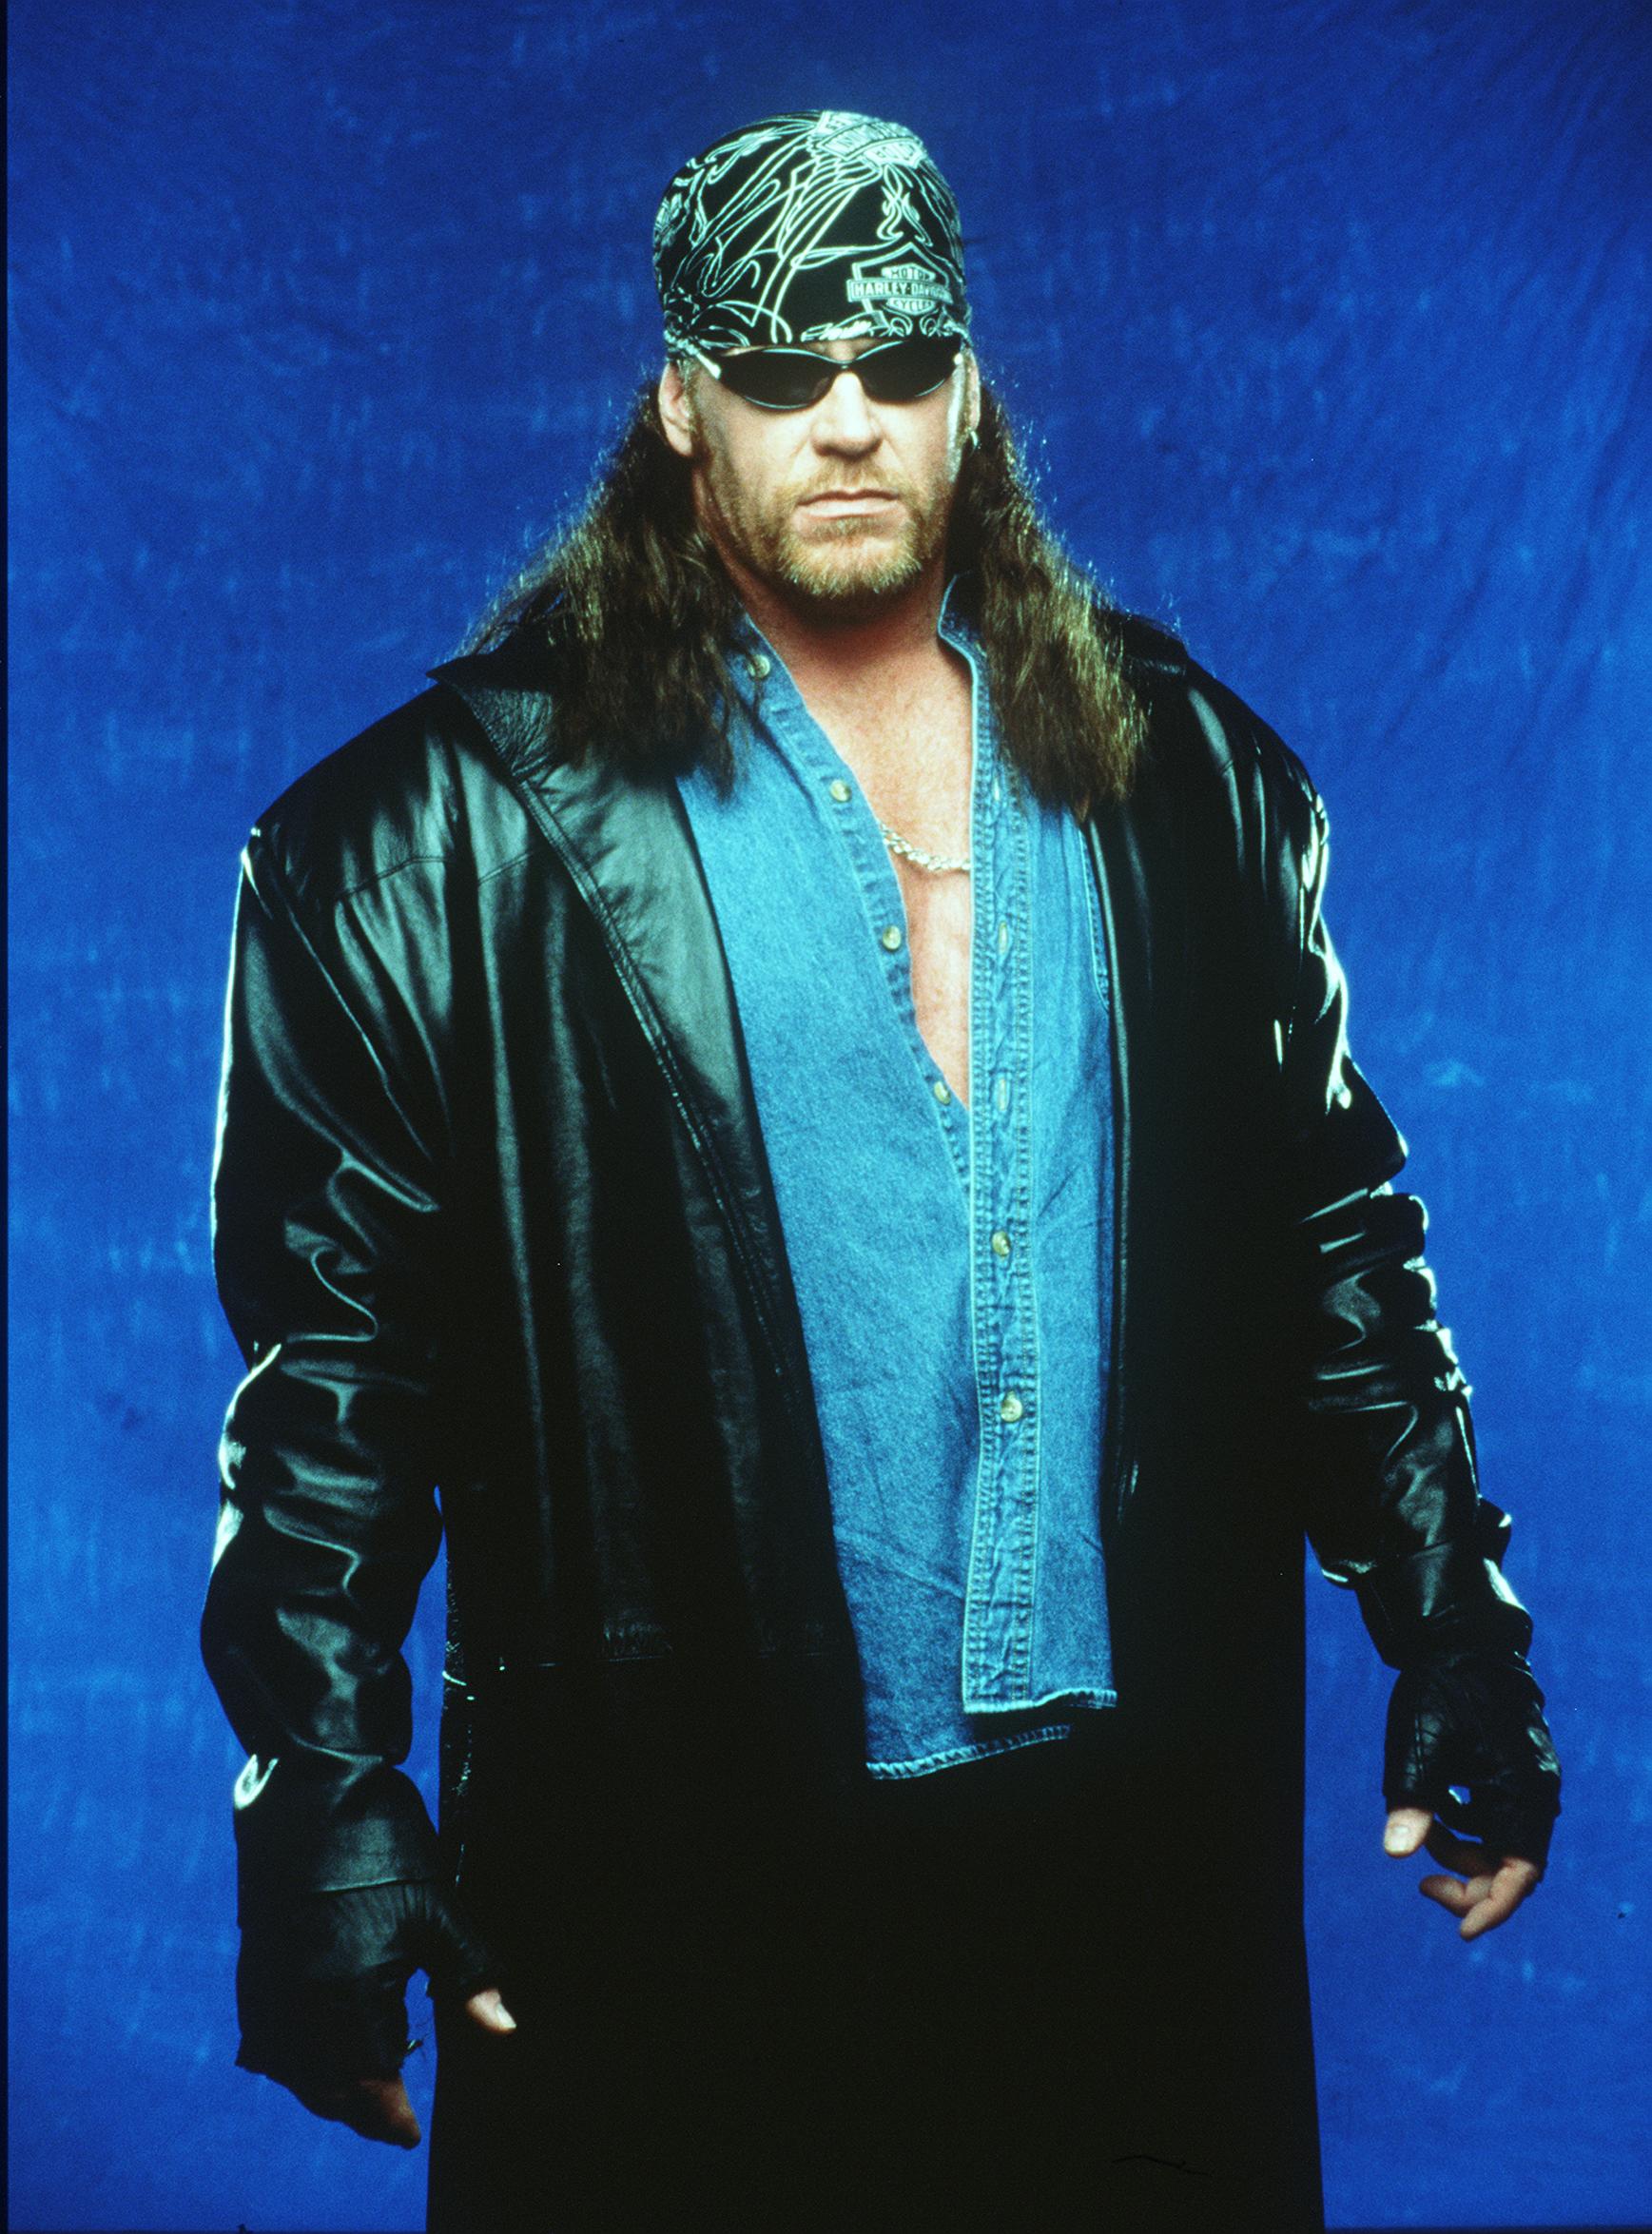 The Undertaker photo